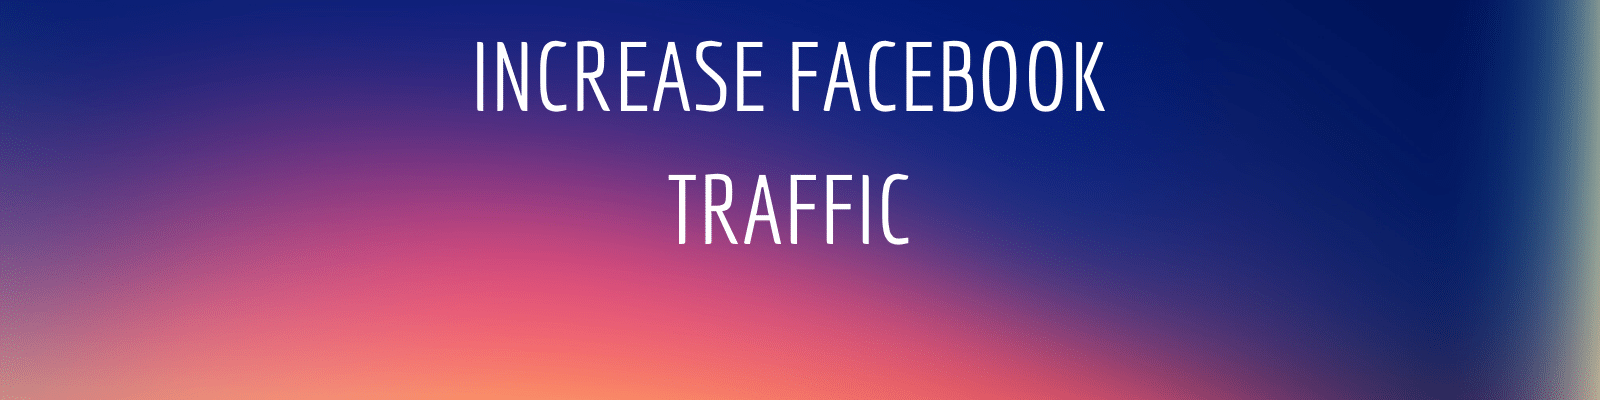 Increase Facebook Traffic